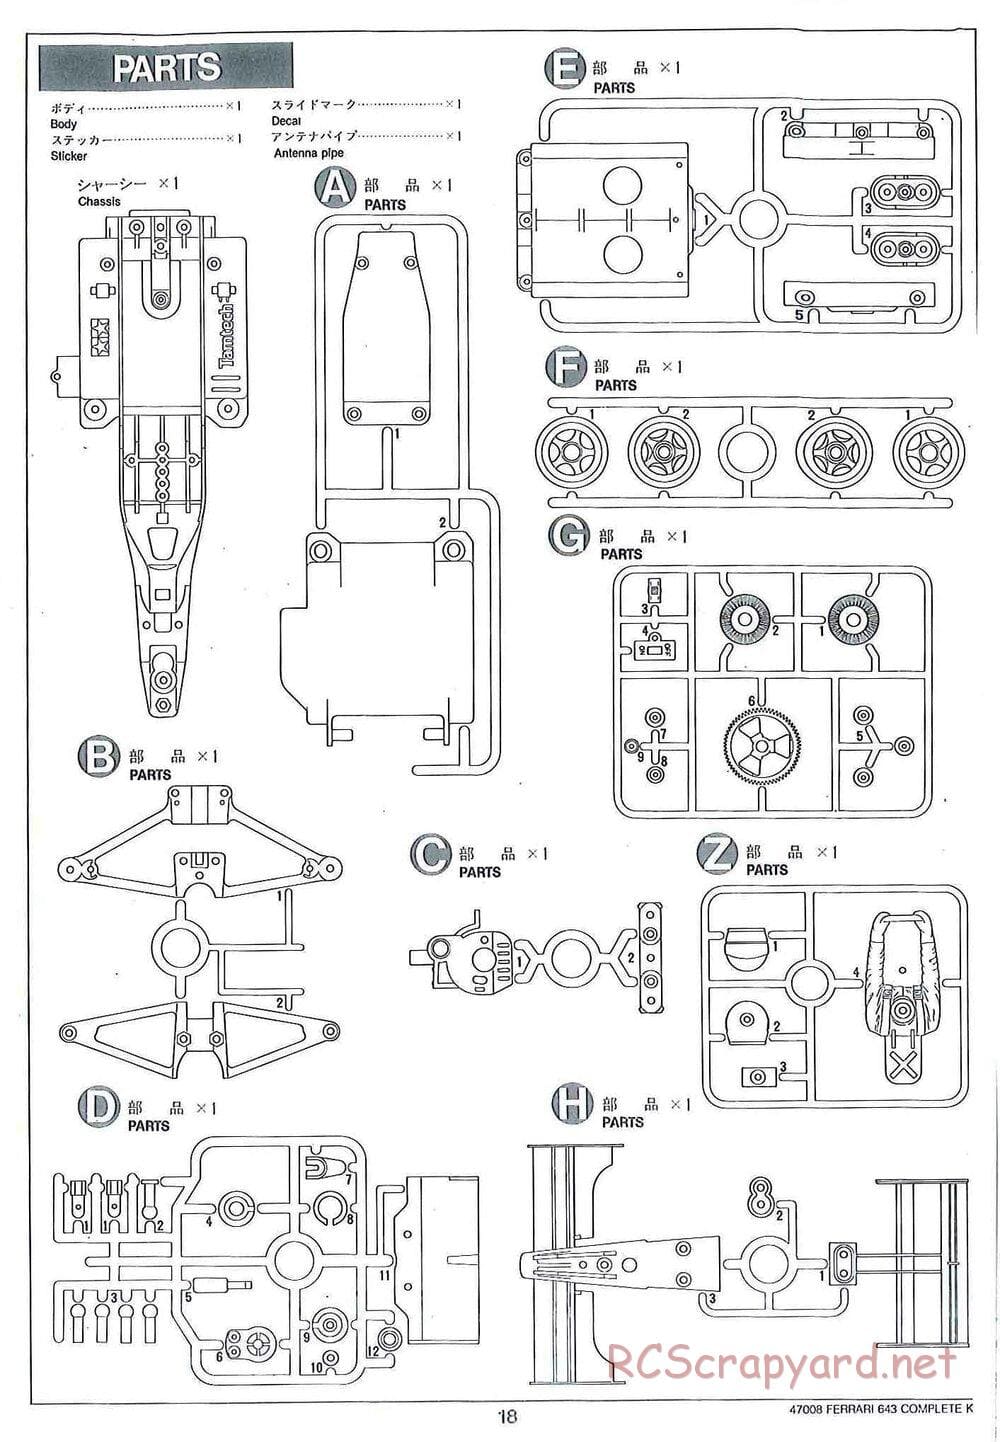 Tamiya - Tamtech - Ferrari 643 Chassis - Manual - Page 18